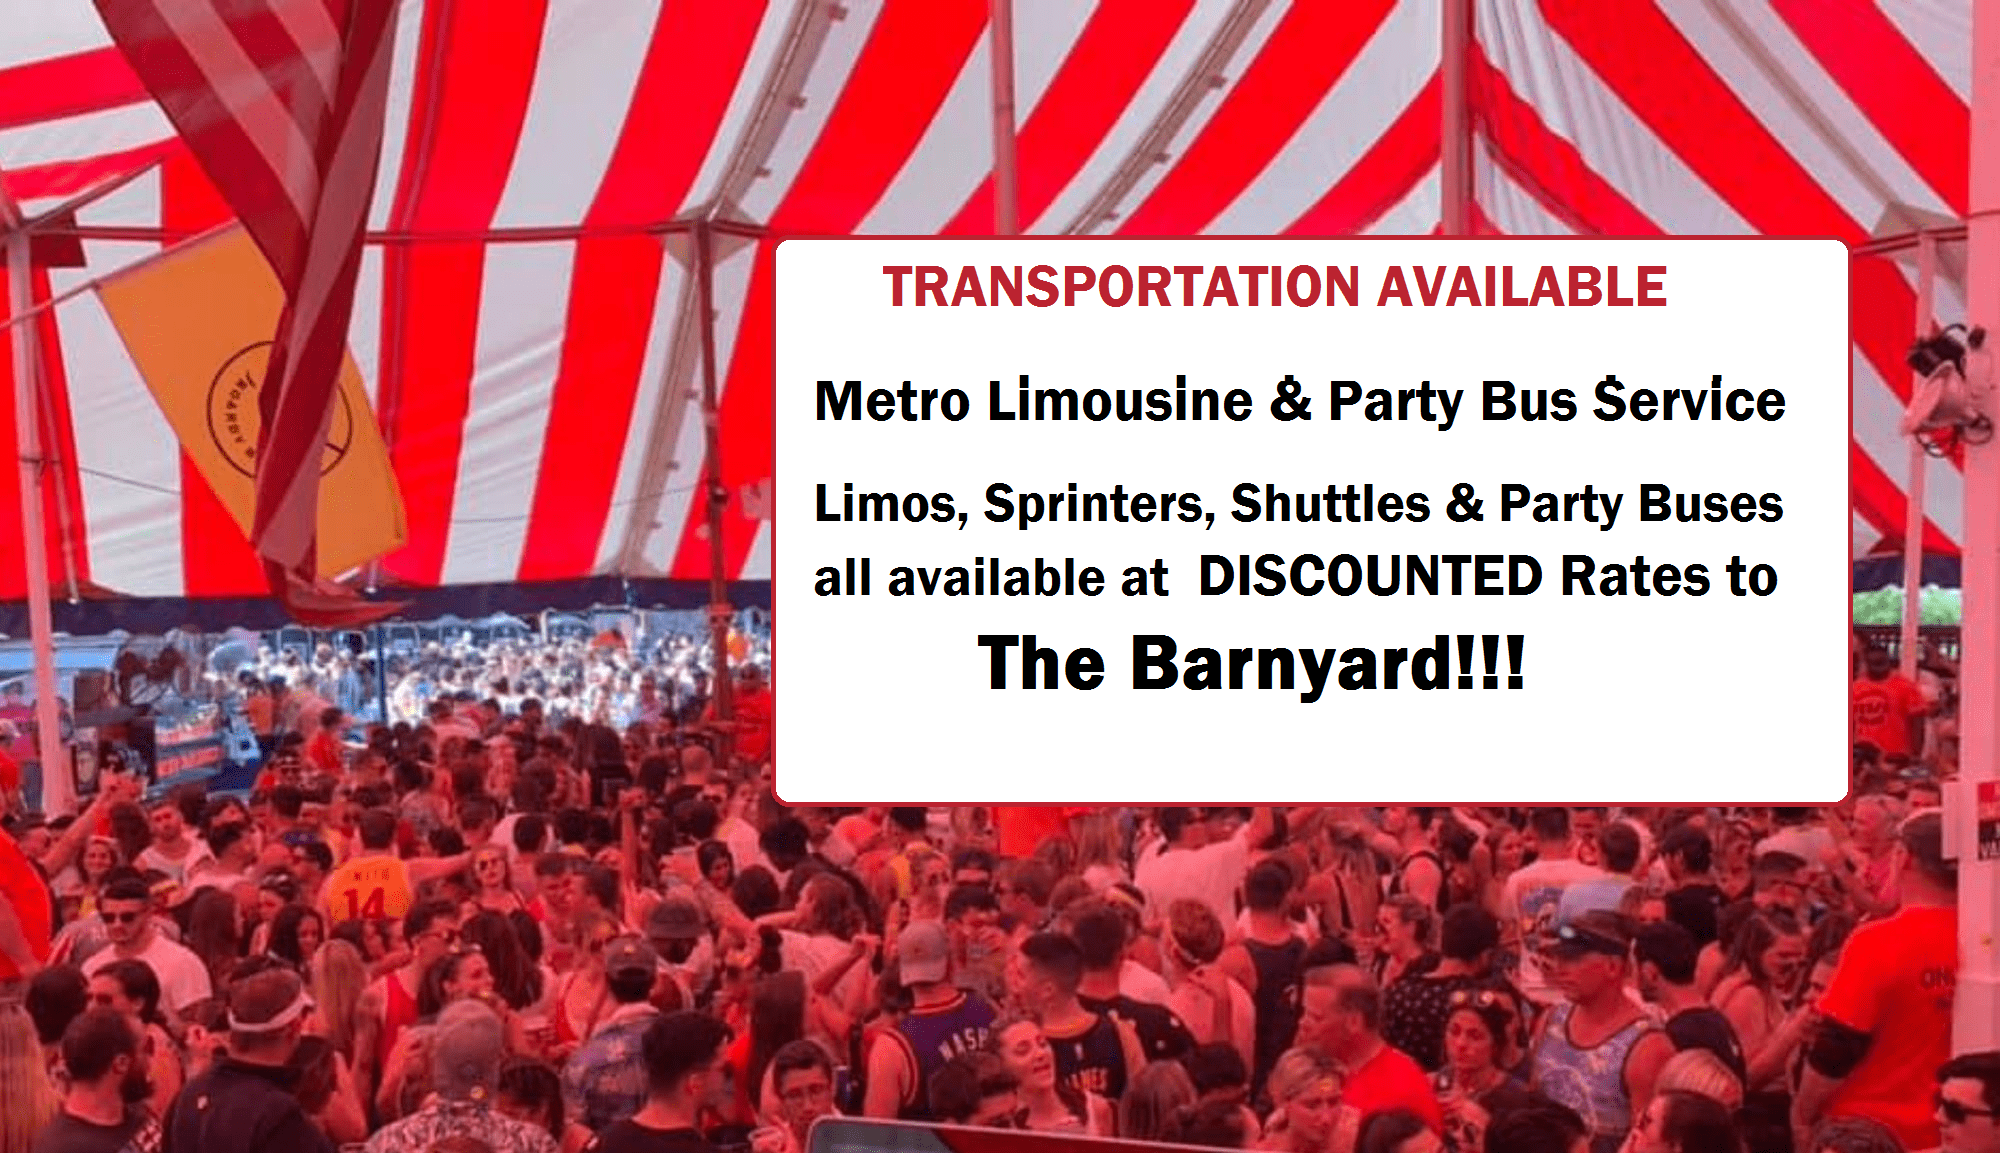 The Barnyard Hampton Bays NY - Metro Limousine & Party Bus Service